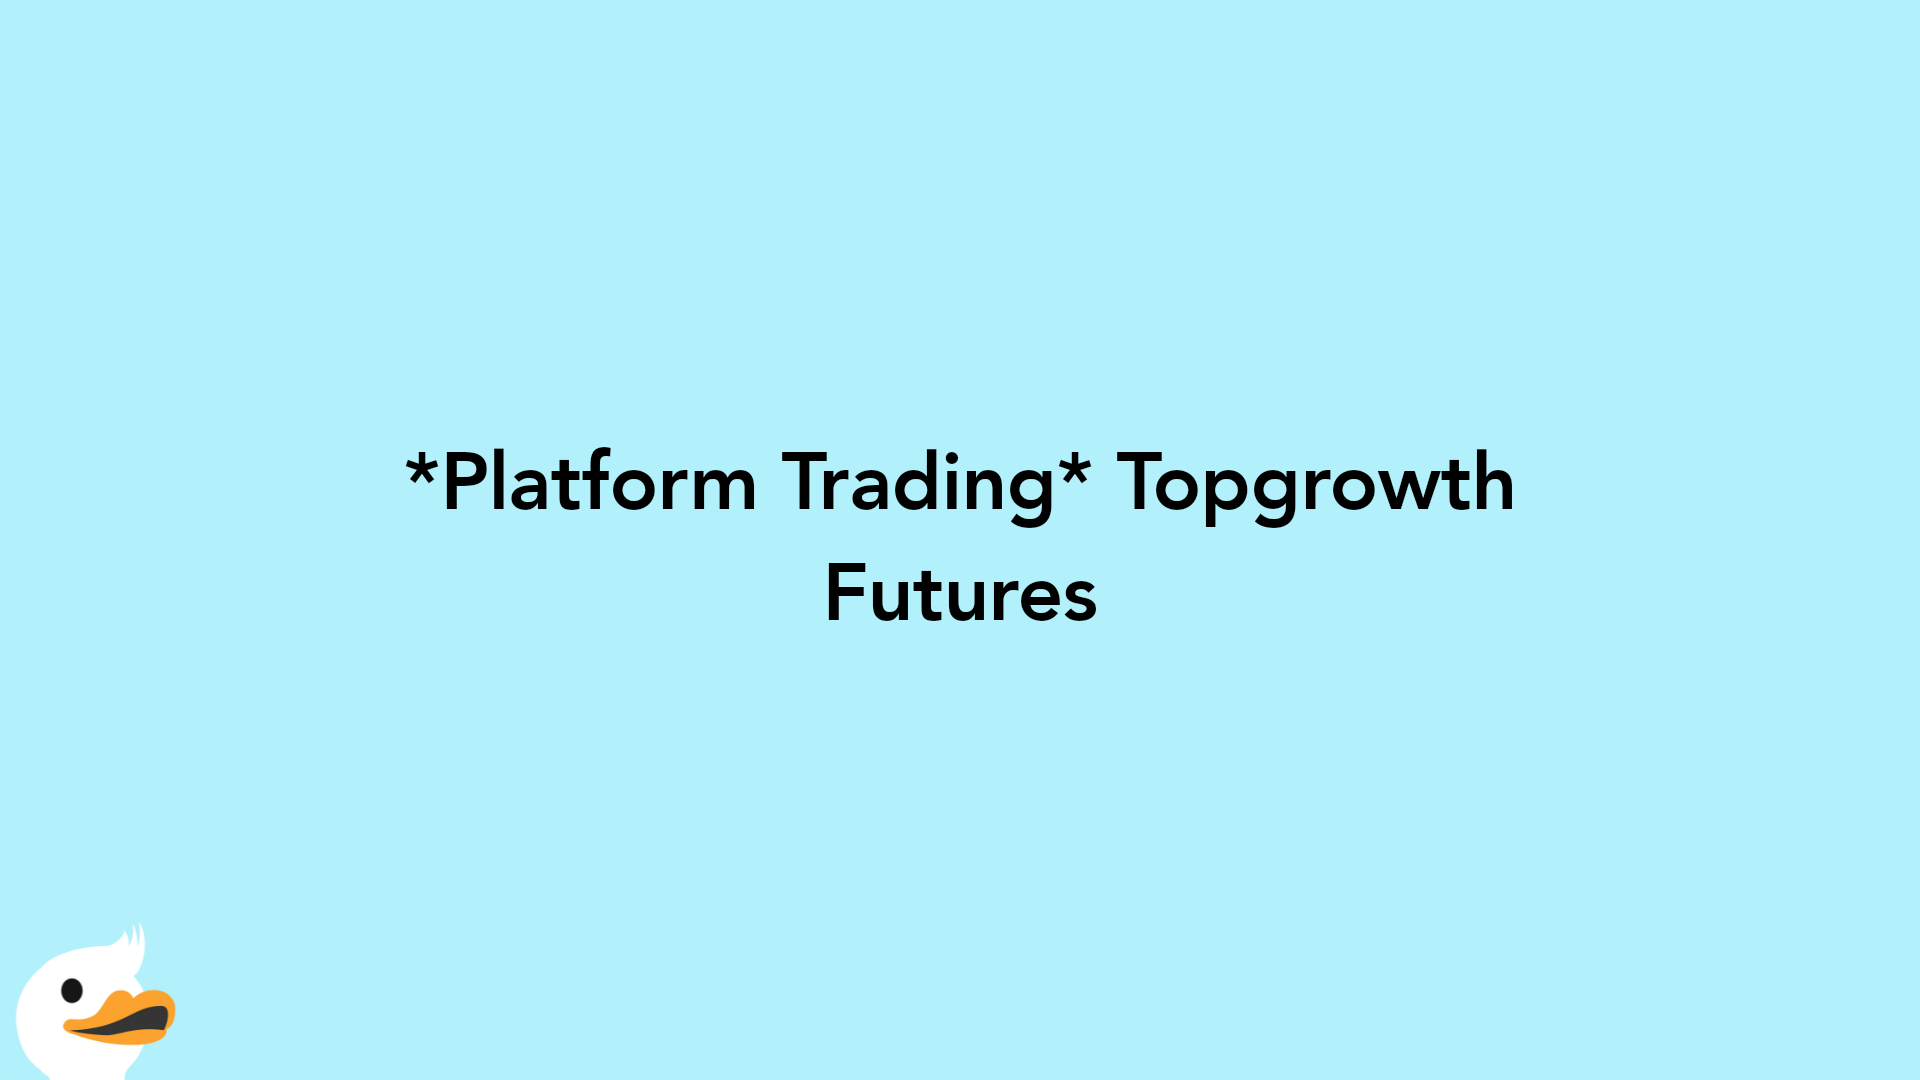 Platform Trading Topgrowth Futures